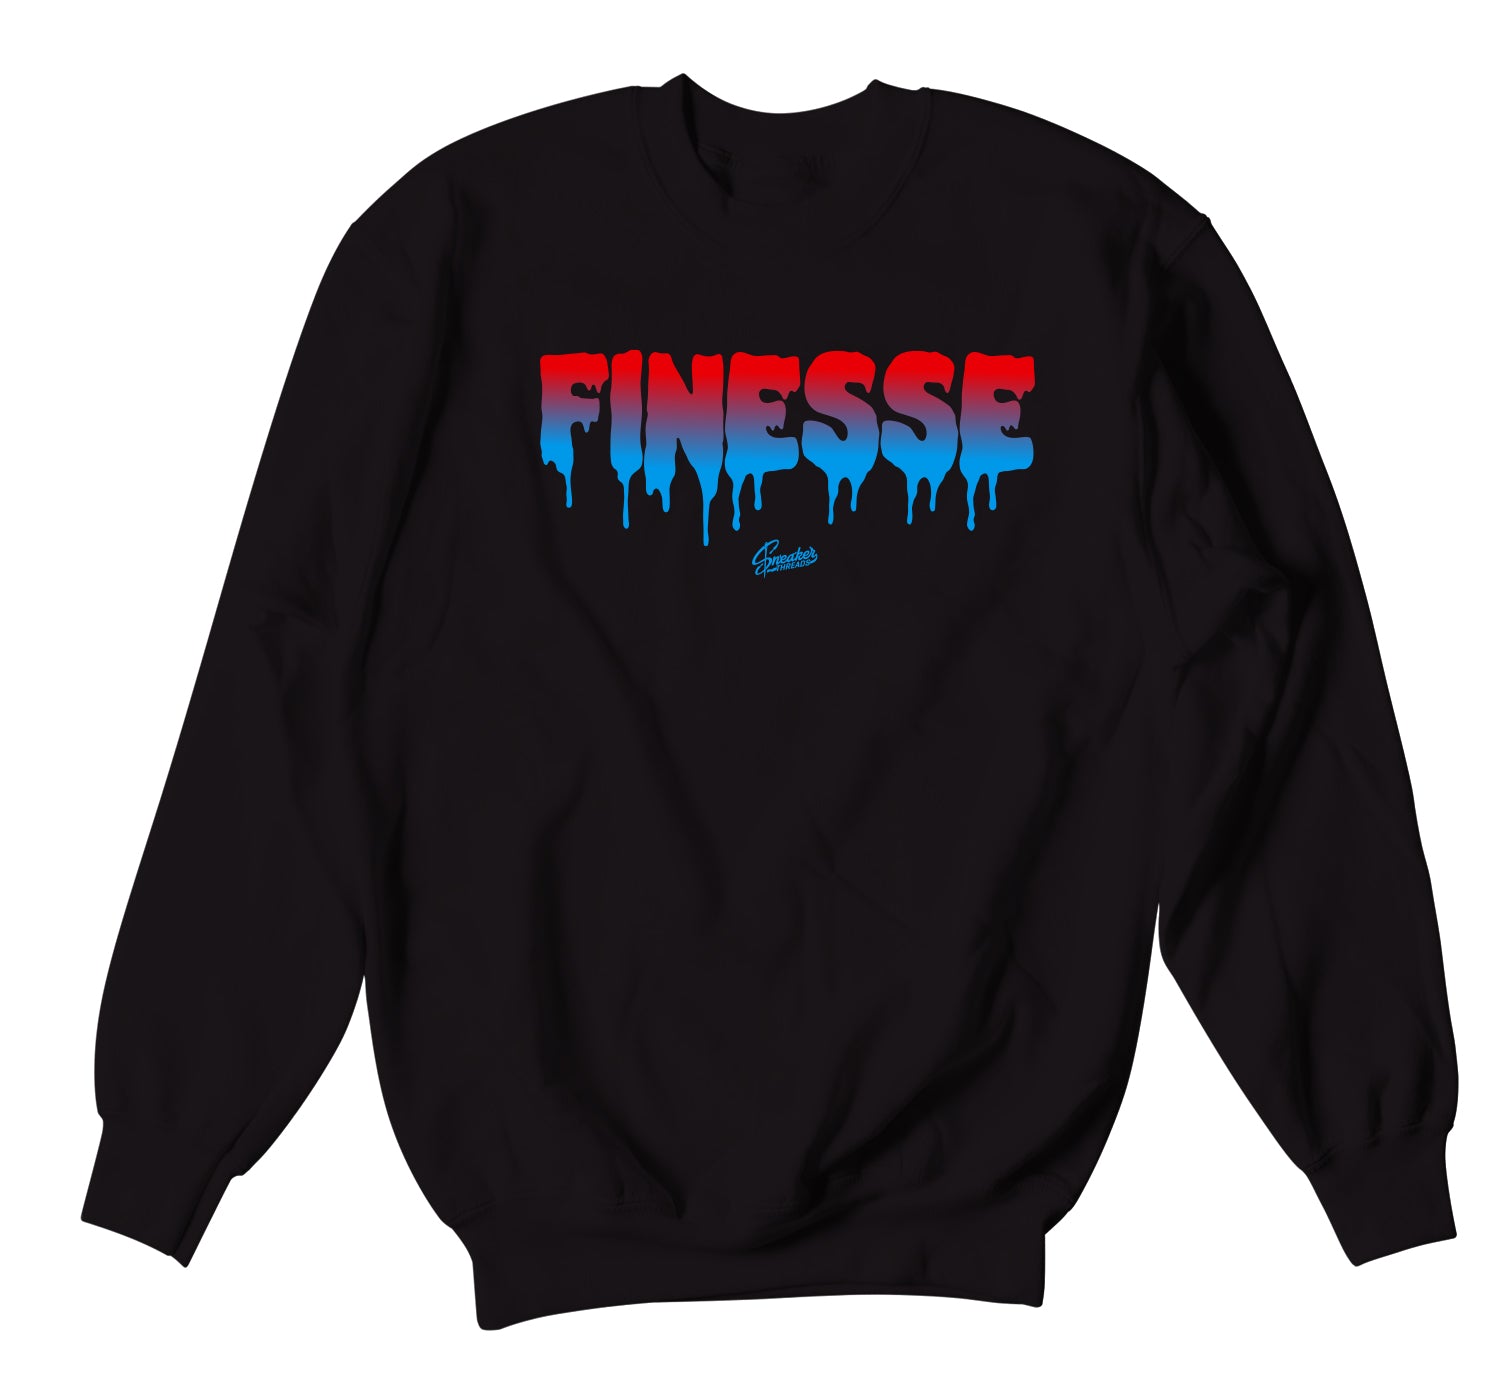 Retro 1 NC To CHI Sweater - Finesse - Black